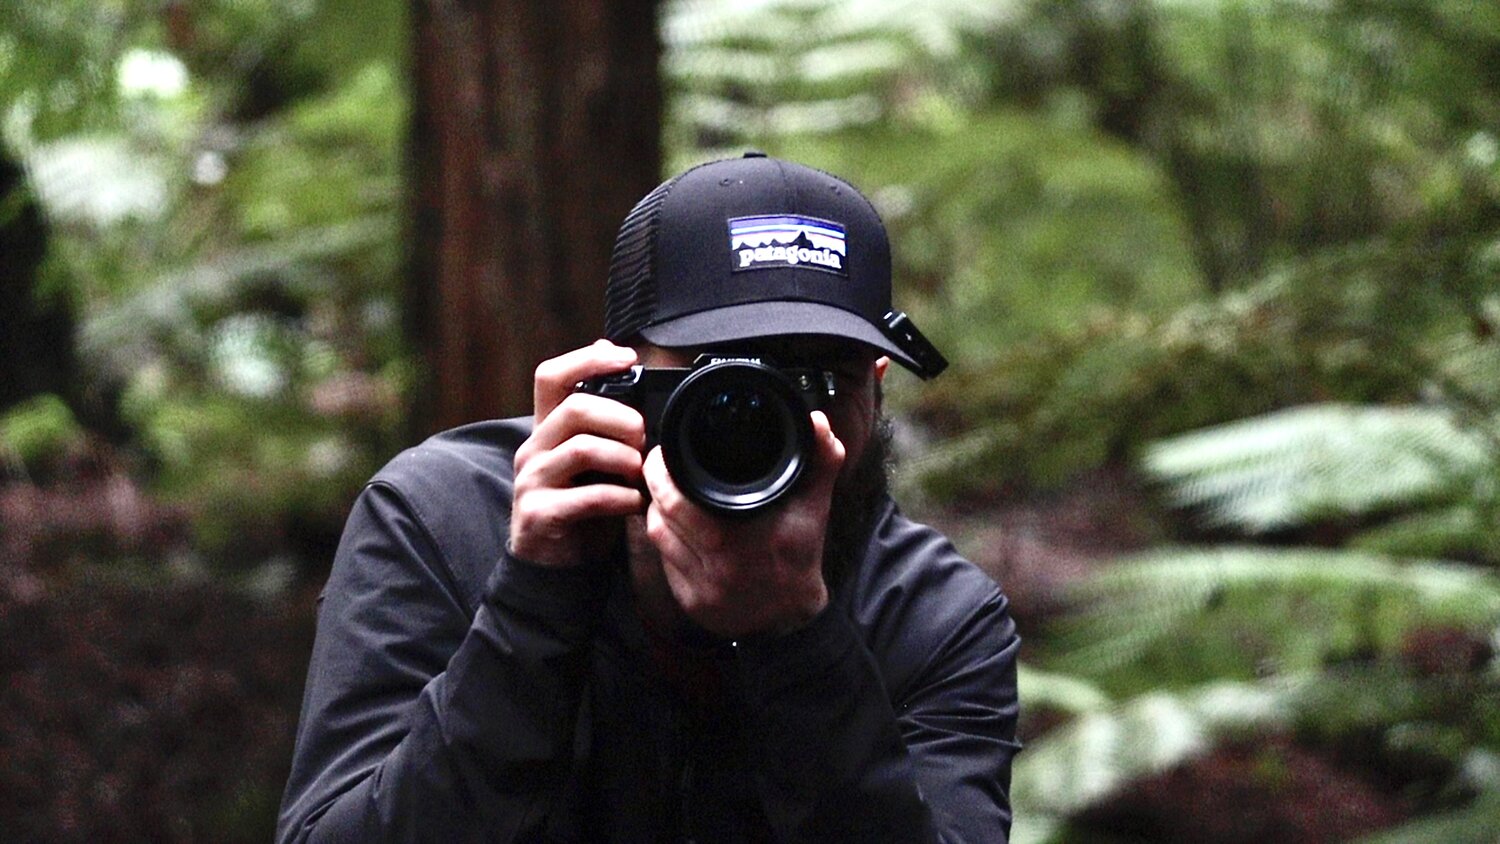 Landscape Photography Workshops and Tours with Award Wining New Zealand Landscape Photographer Artist Stephen Milner